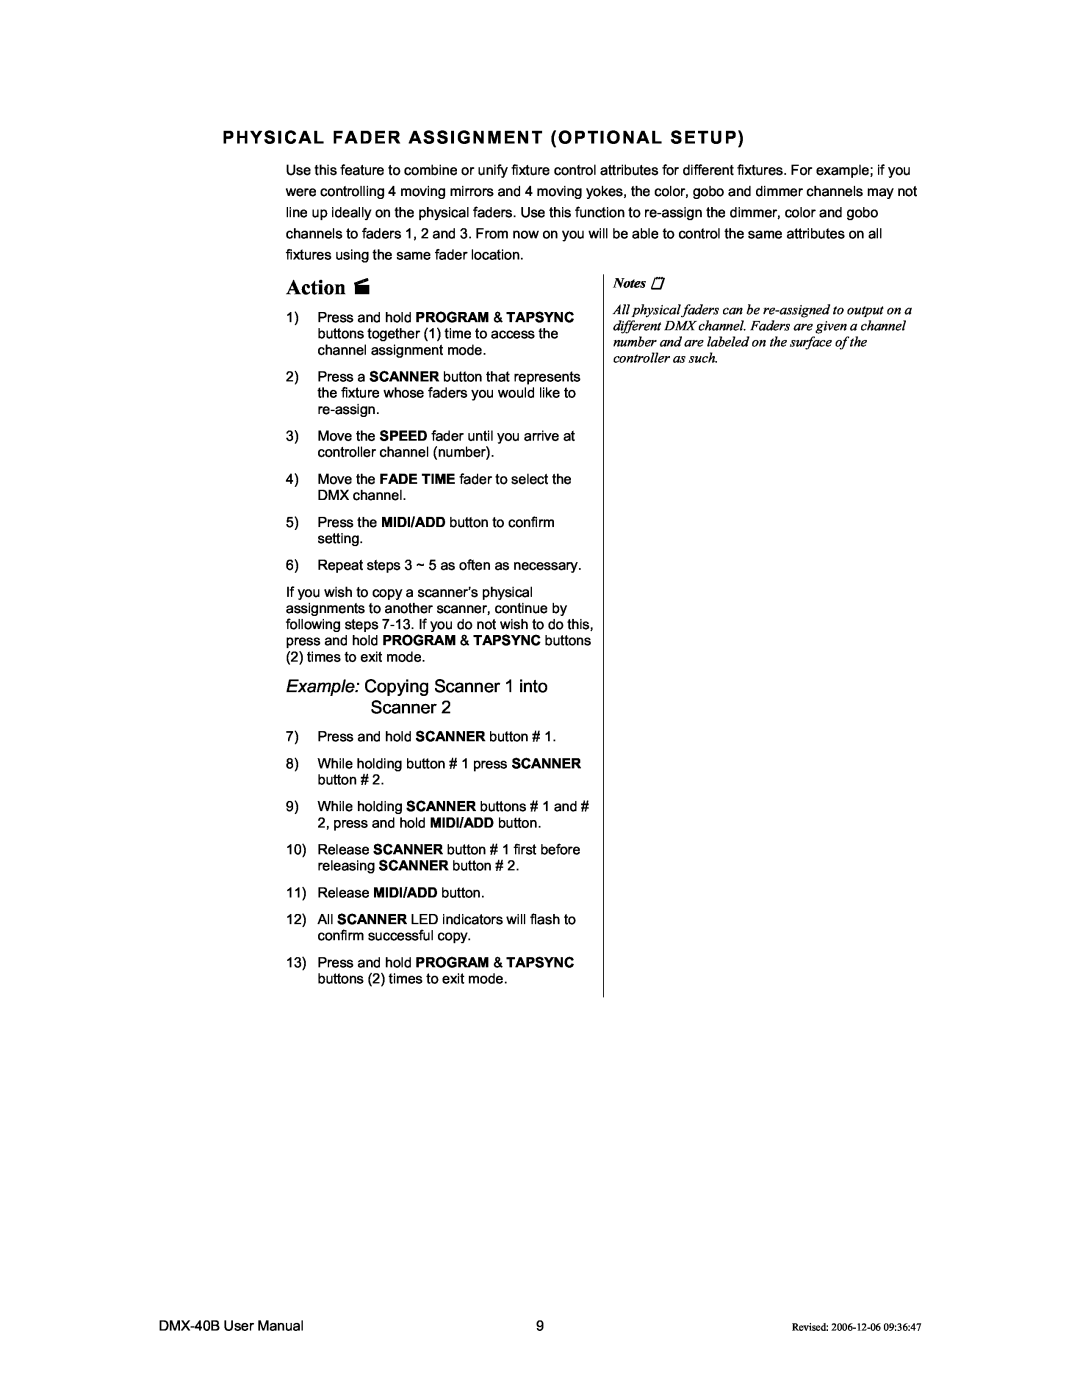 Chauvet DMX-40B user manual Action, Physical Fader Assignment Optional Setup 